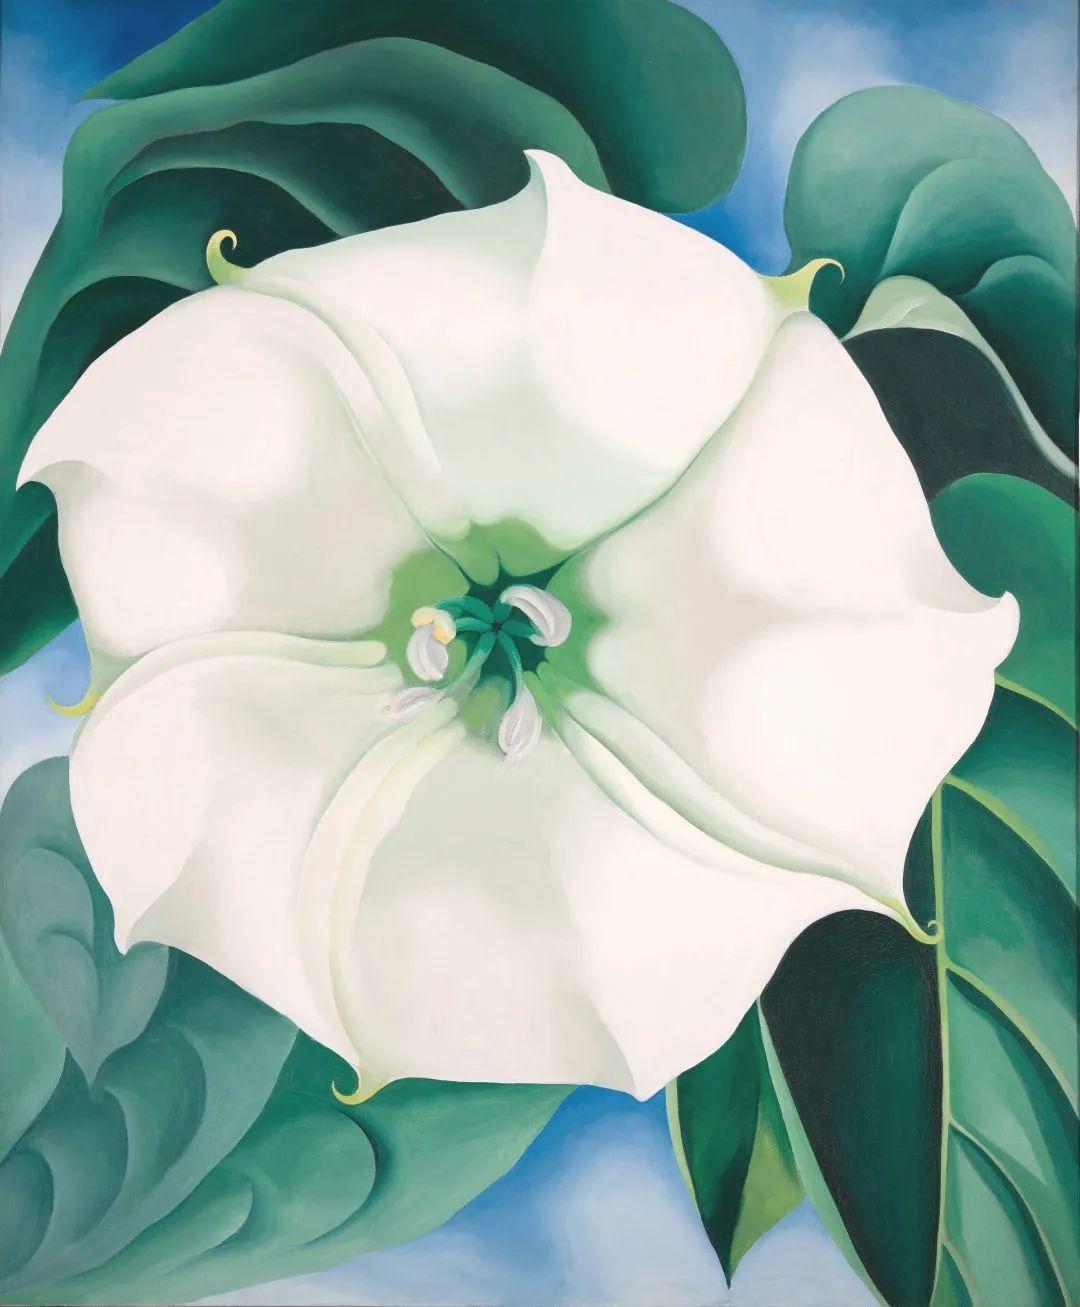 Georgia O'Keeffe,Jimson Weed/White Flower No. 1, 1932